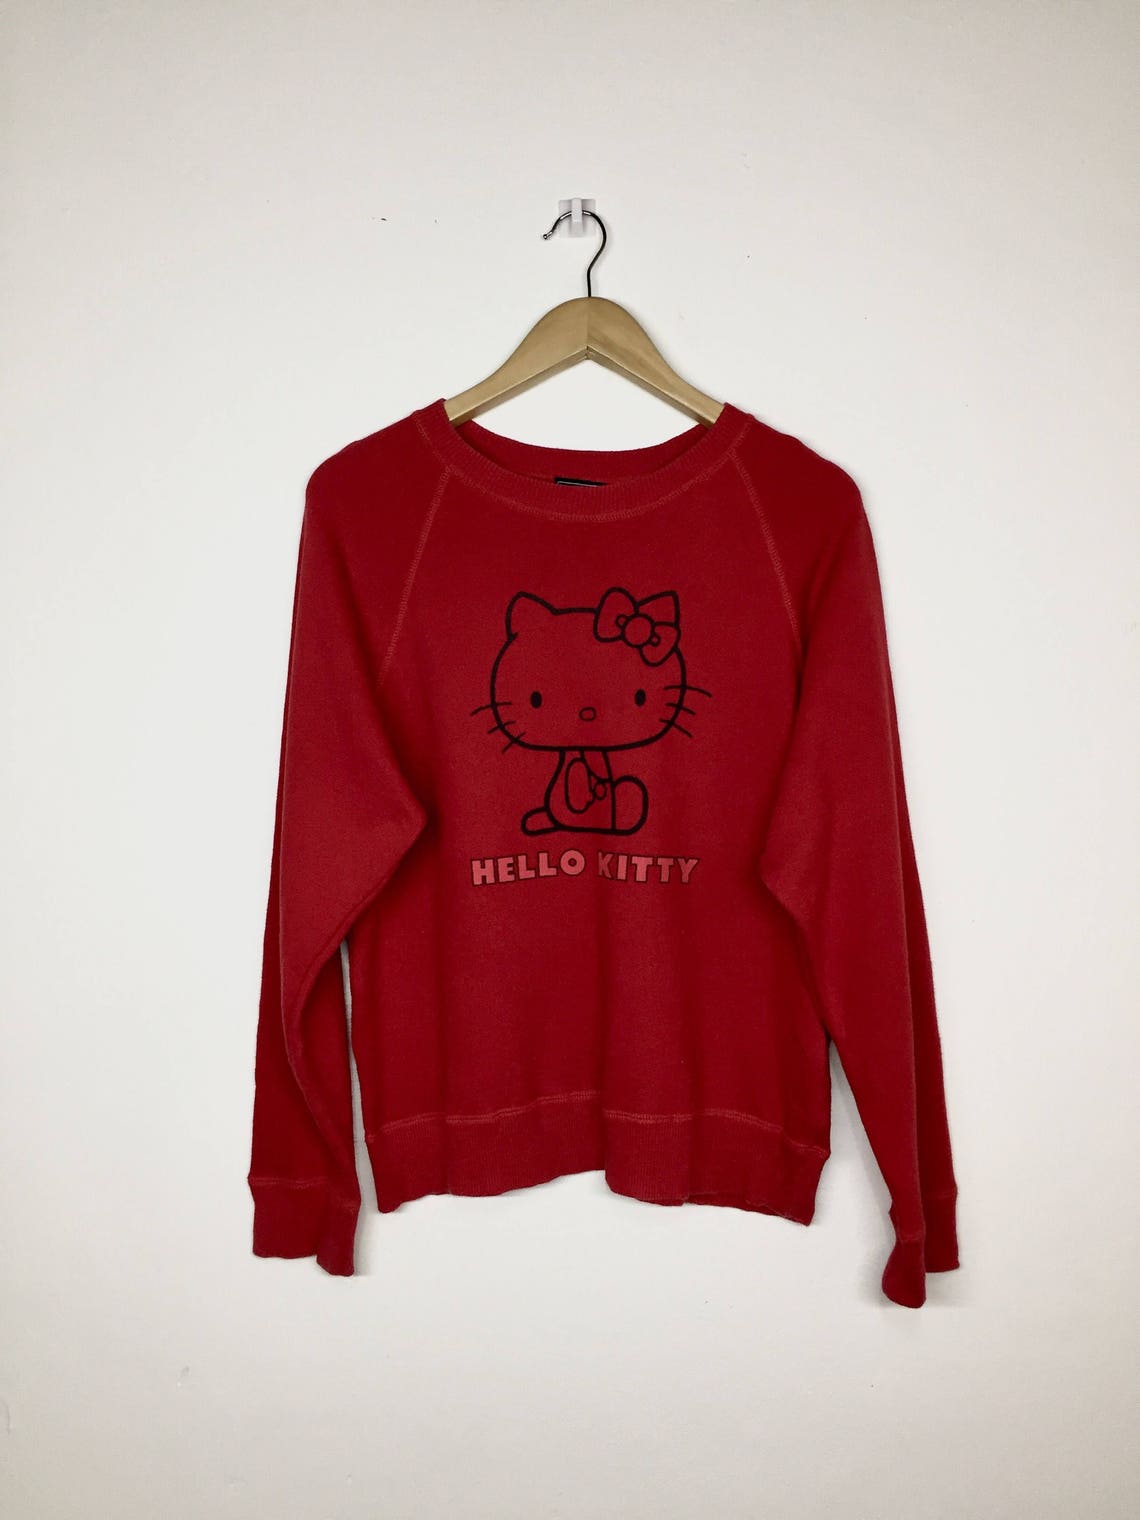 Hello Kitty Sweatshirt / Red Colour / Cartoon Sweatshirt / - Etsy